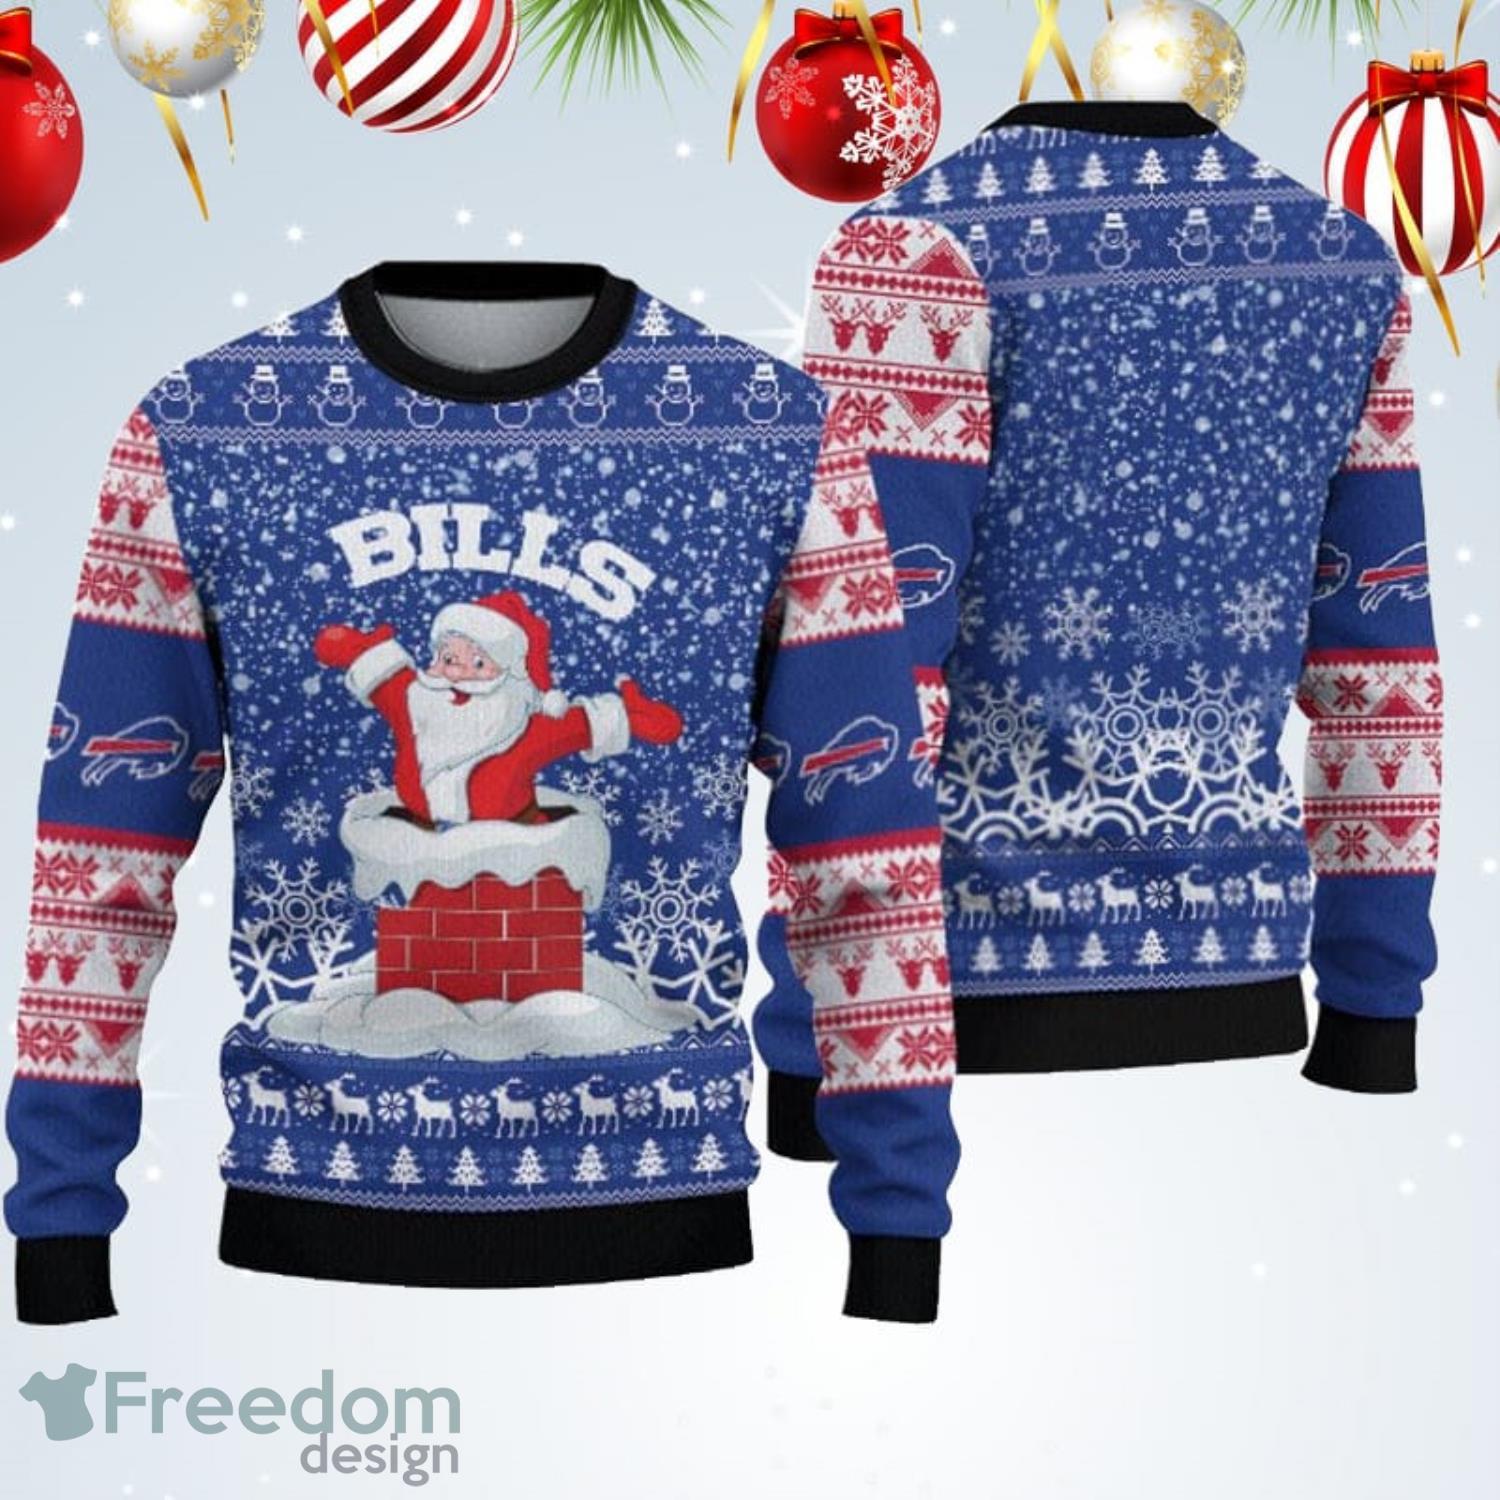 Buffalo-Bills-nfl-Christmas-Santa-Claus-Ugly-Christmas-Sweater-custom-for-fan